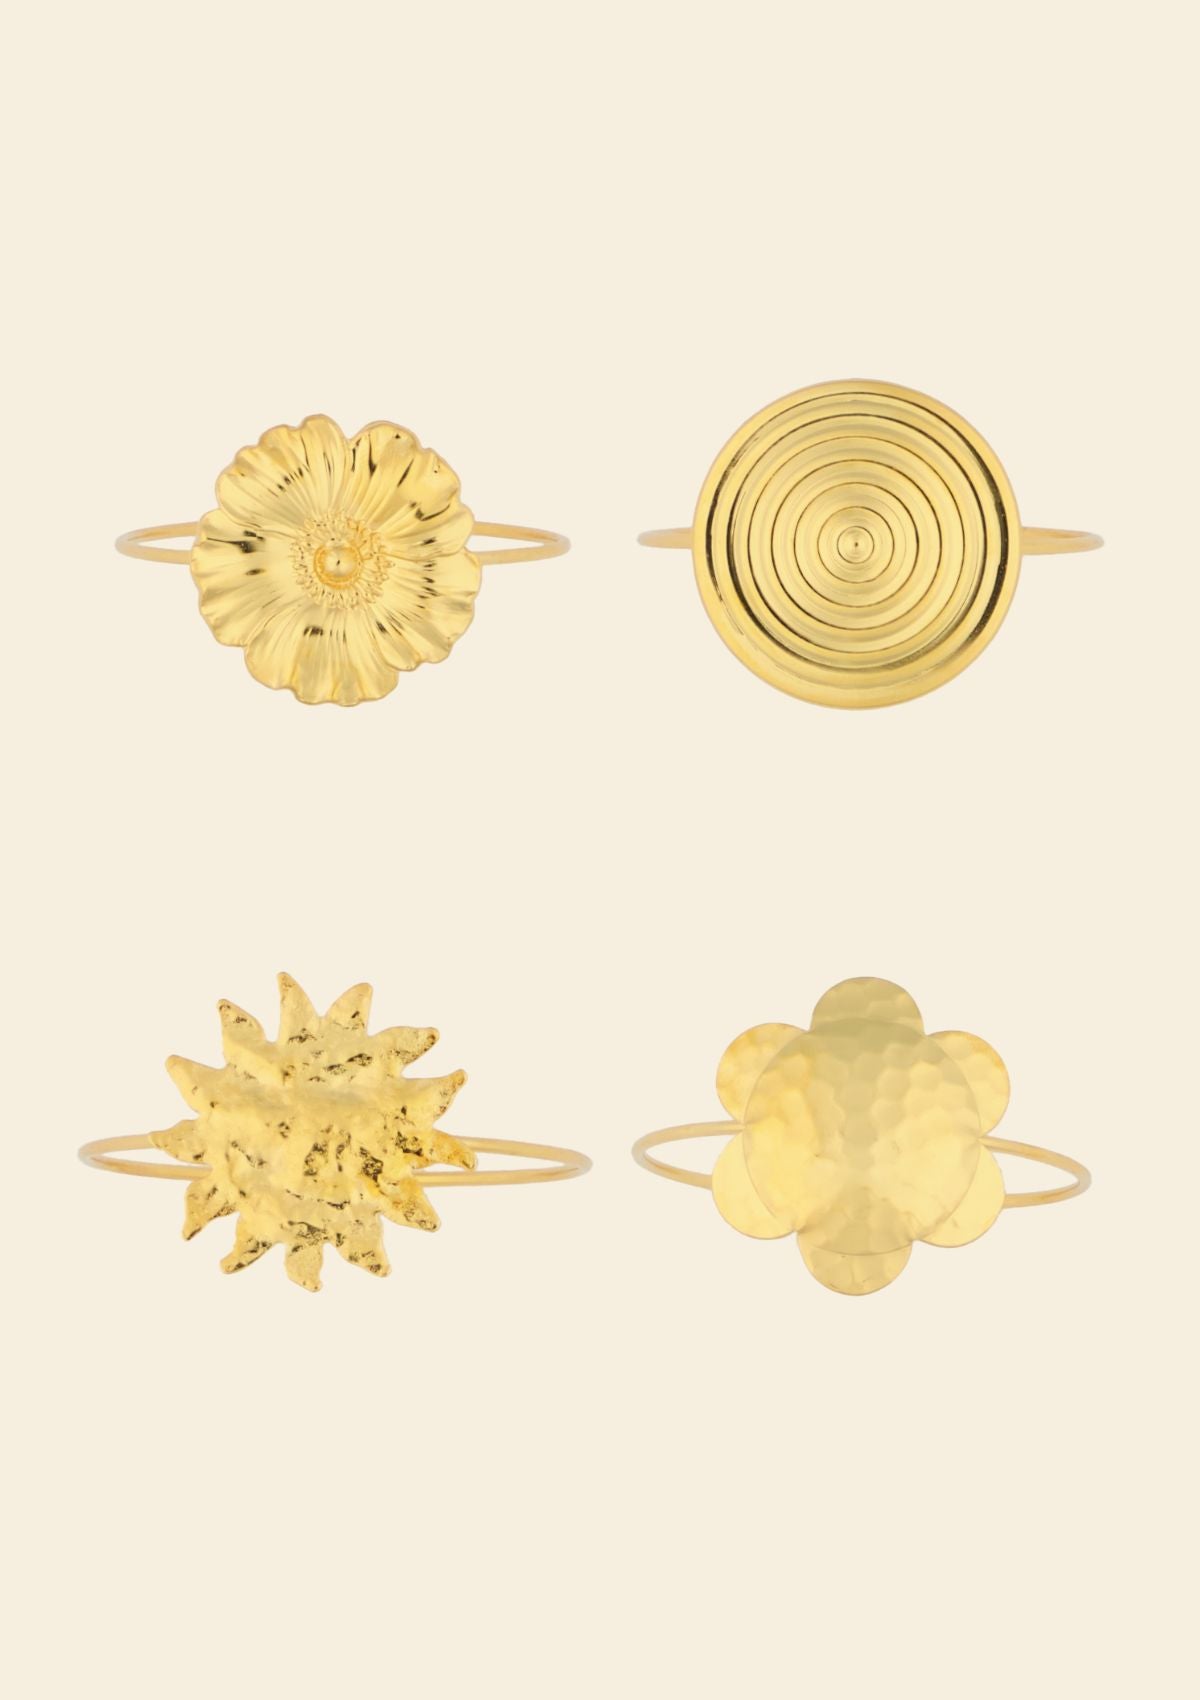 Gold jewelry napkin rings